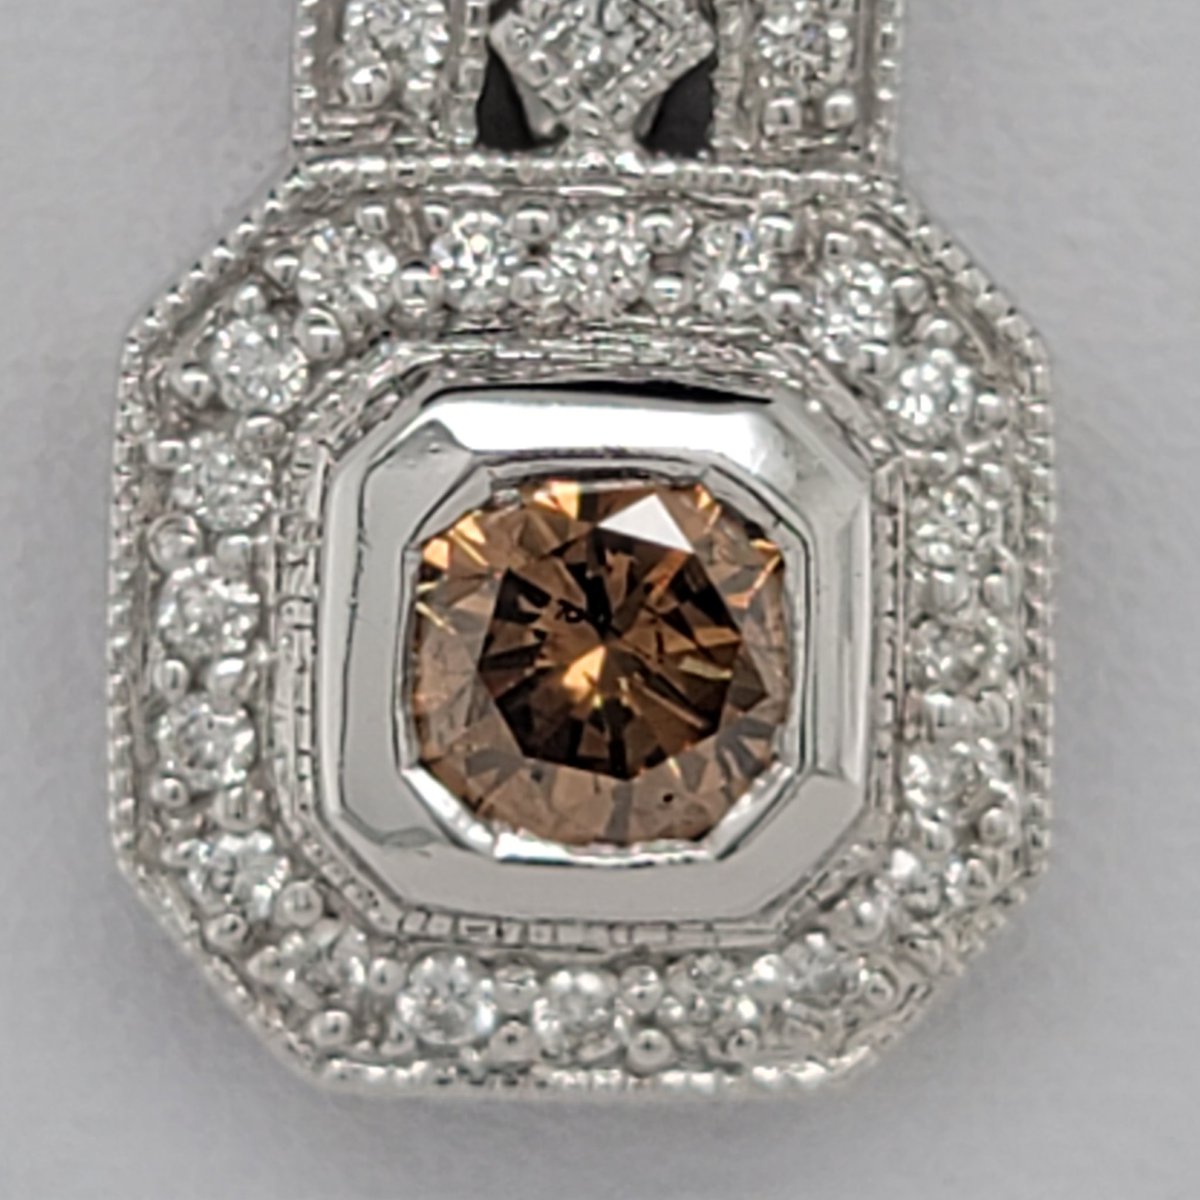 💎 Just landed...
.
I love cognac diamonds 😍
.
.
.
#cognacdiamond #diamonds #gems #gemstones #gia #agta #jewelry #the4cs #customjewelrydesign #birthstone #madeinlosangeles #madeintheusa #jewelrylovers #jewelrydesigner #jewelryaddicts #gemlover #jewelryshop #smallbusiness